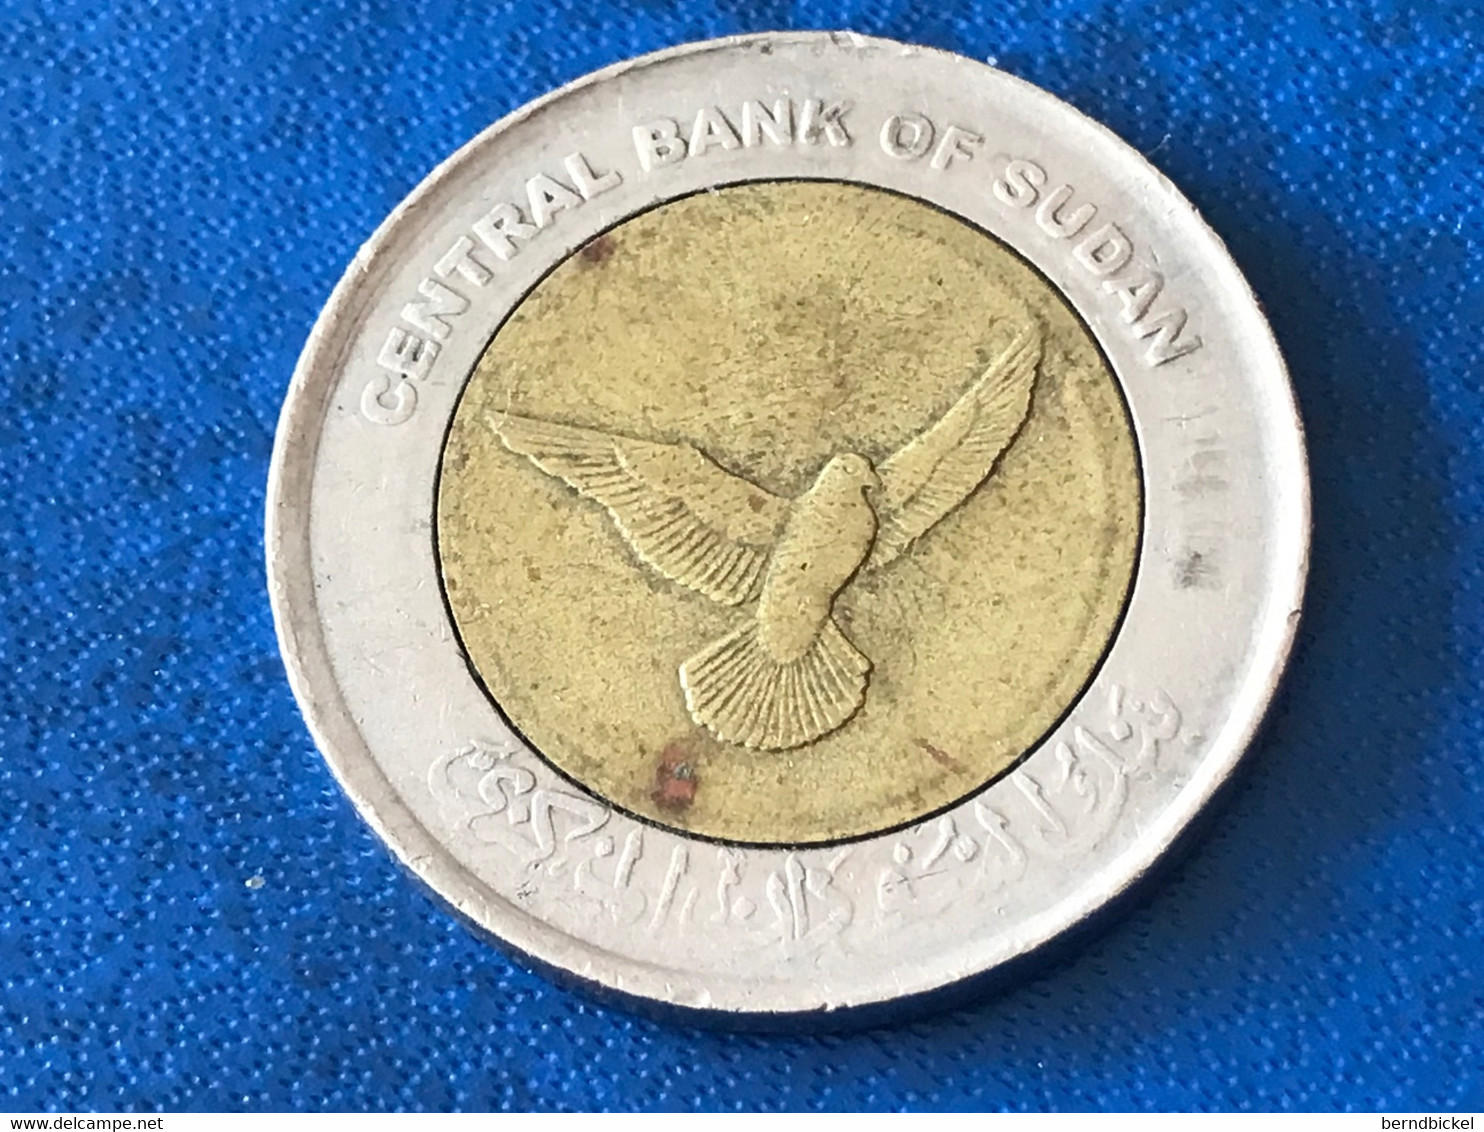 Münze Münzen Umlaufmünze Sudan 50 Piaster 2006 - Soudan